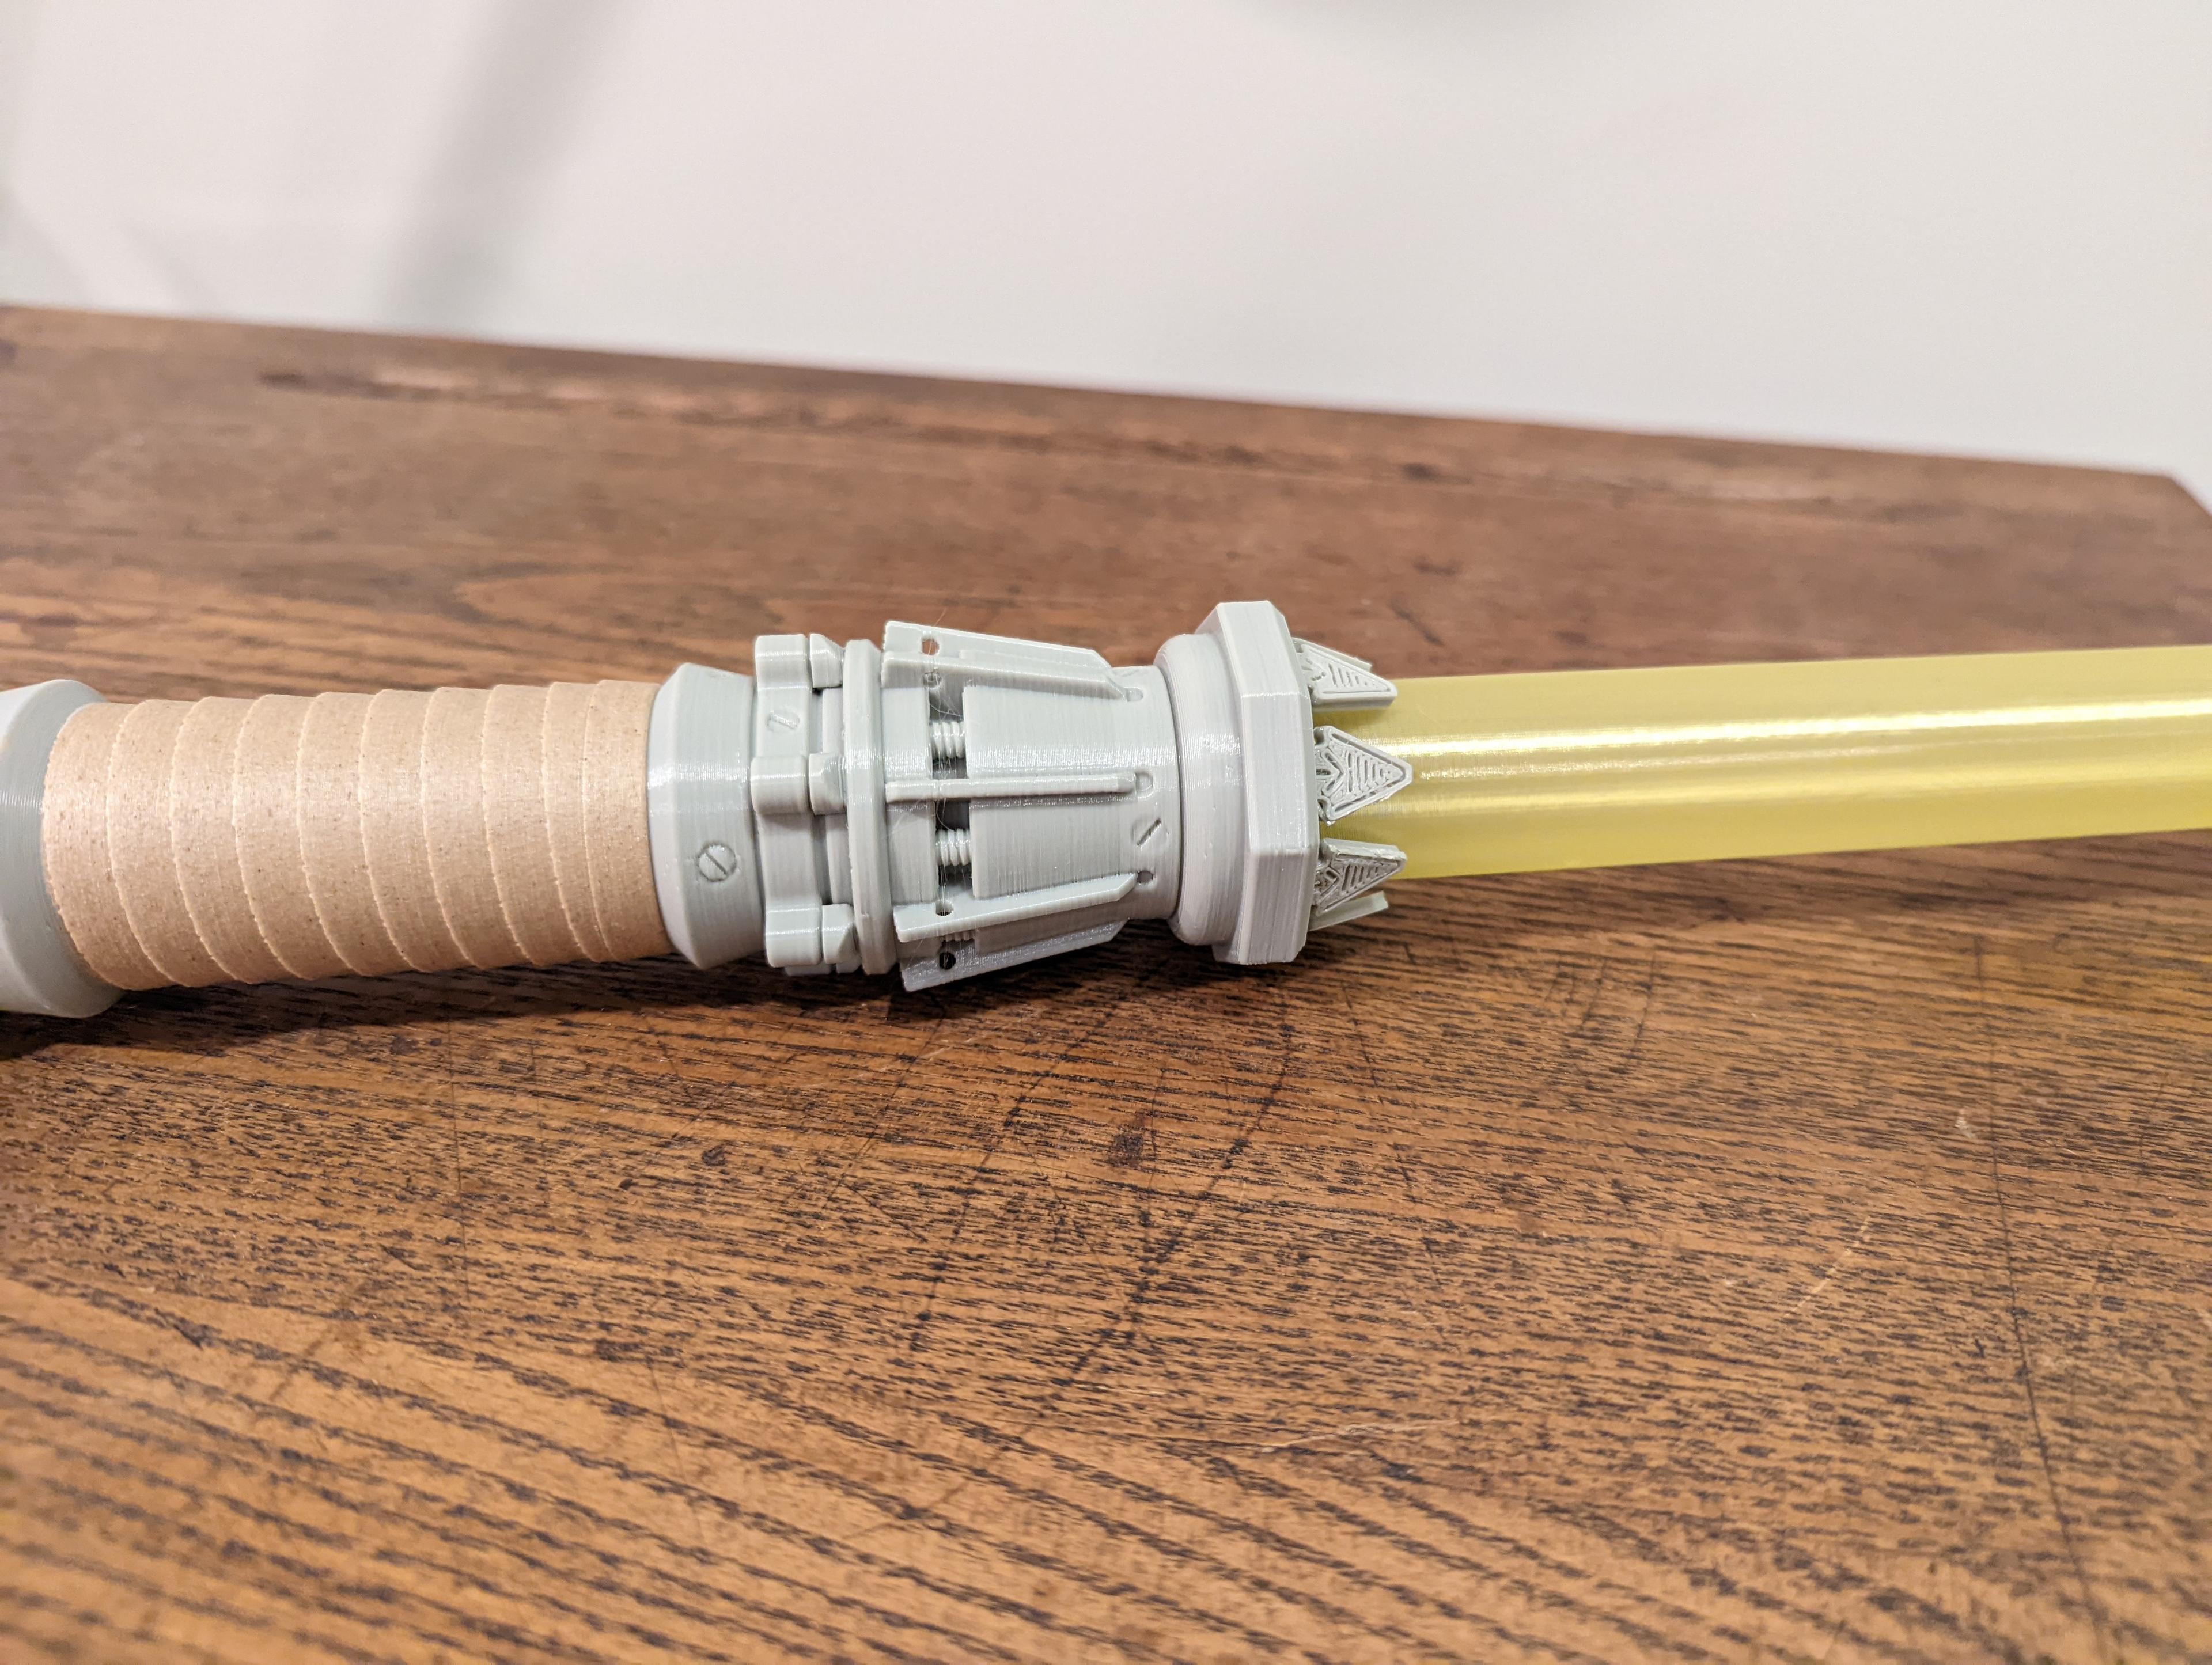 Rey's Collapsing Lightsaber - Sliceworx Storm Grey and Wood PLA
Ziro Translucent Yellow PLA - 3d model